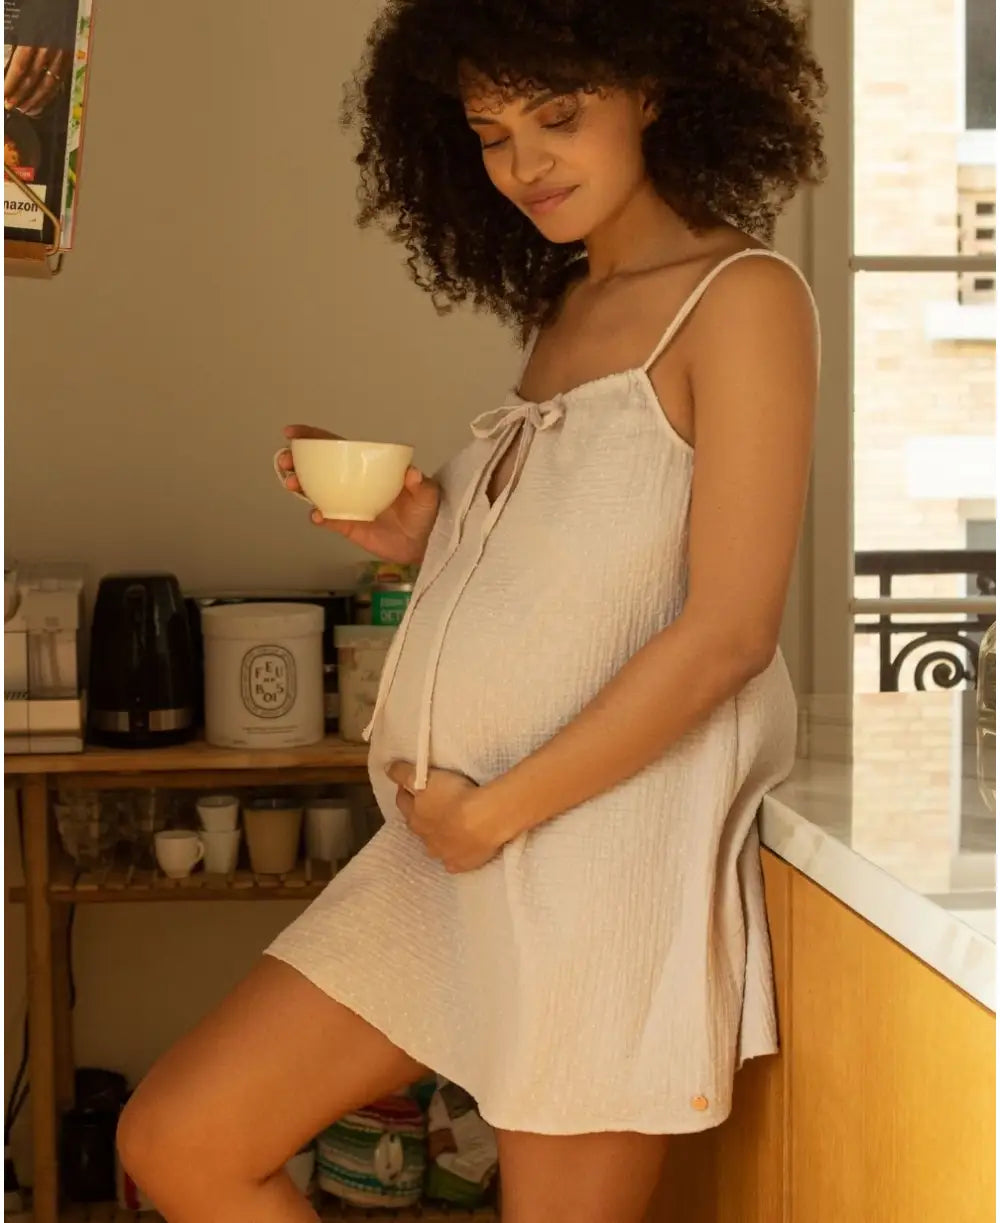 Maternity and nursing nightgown Milk burgundy - Cache Coeur